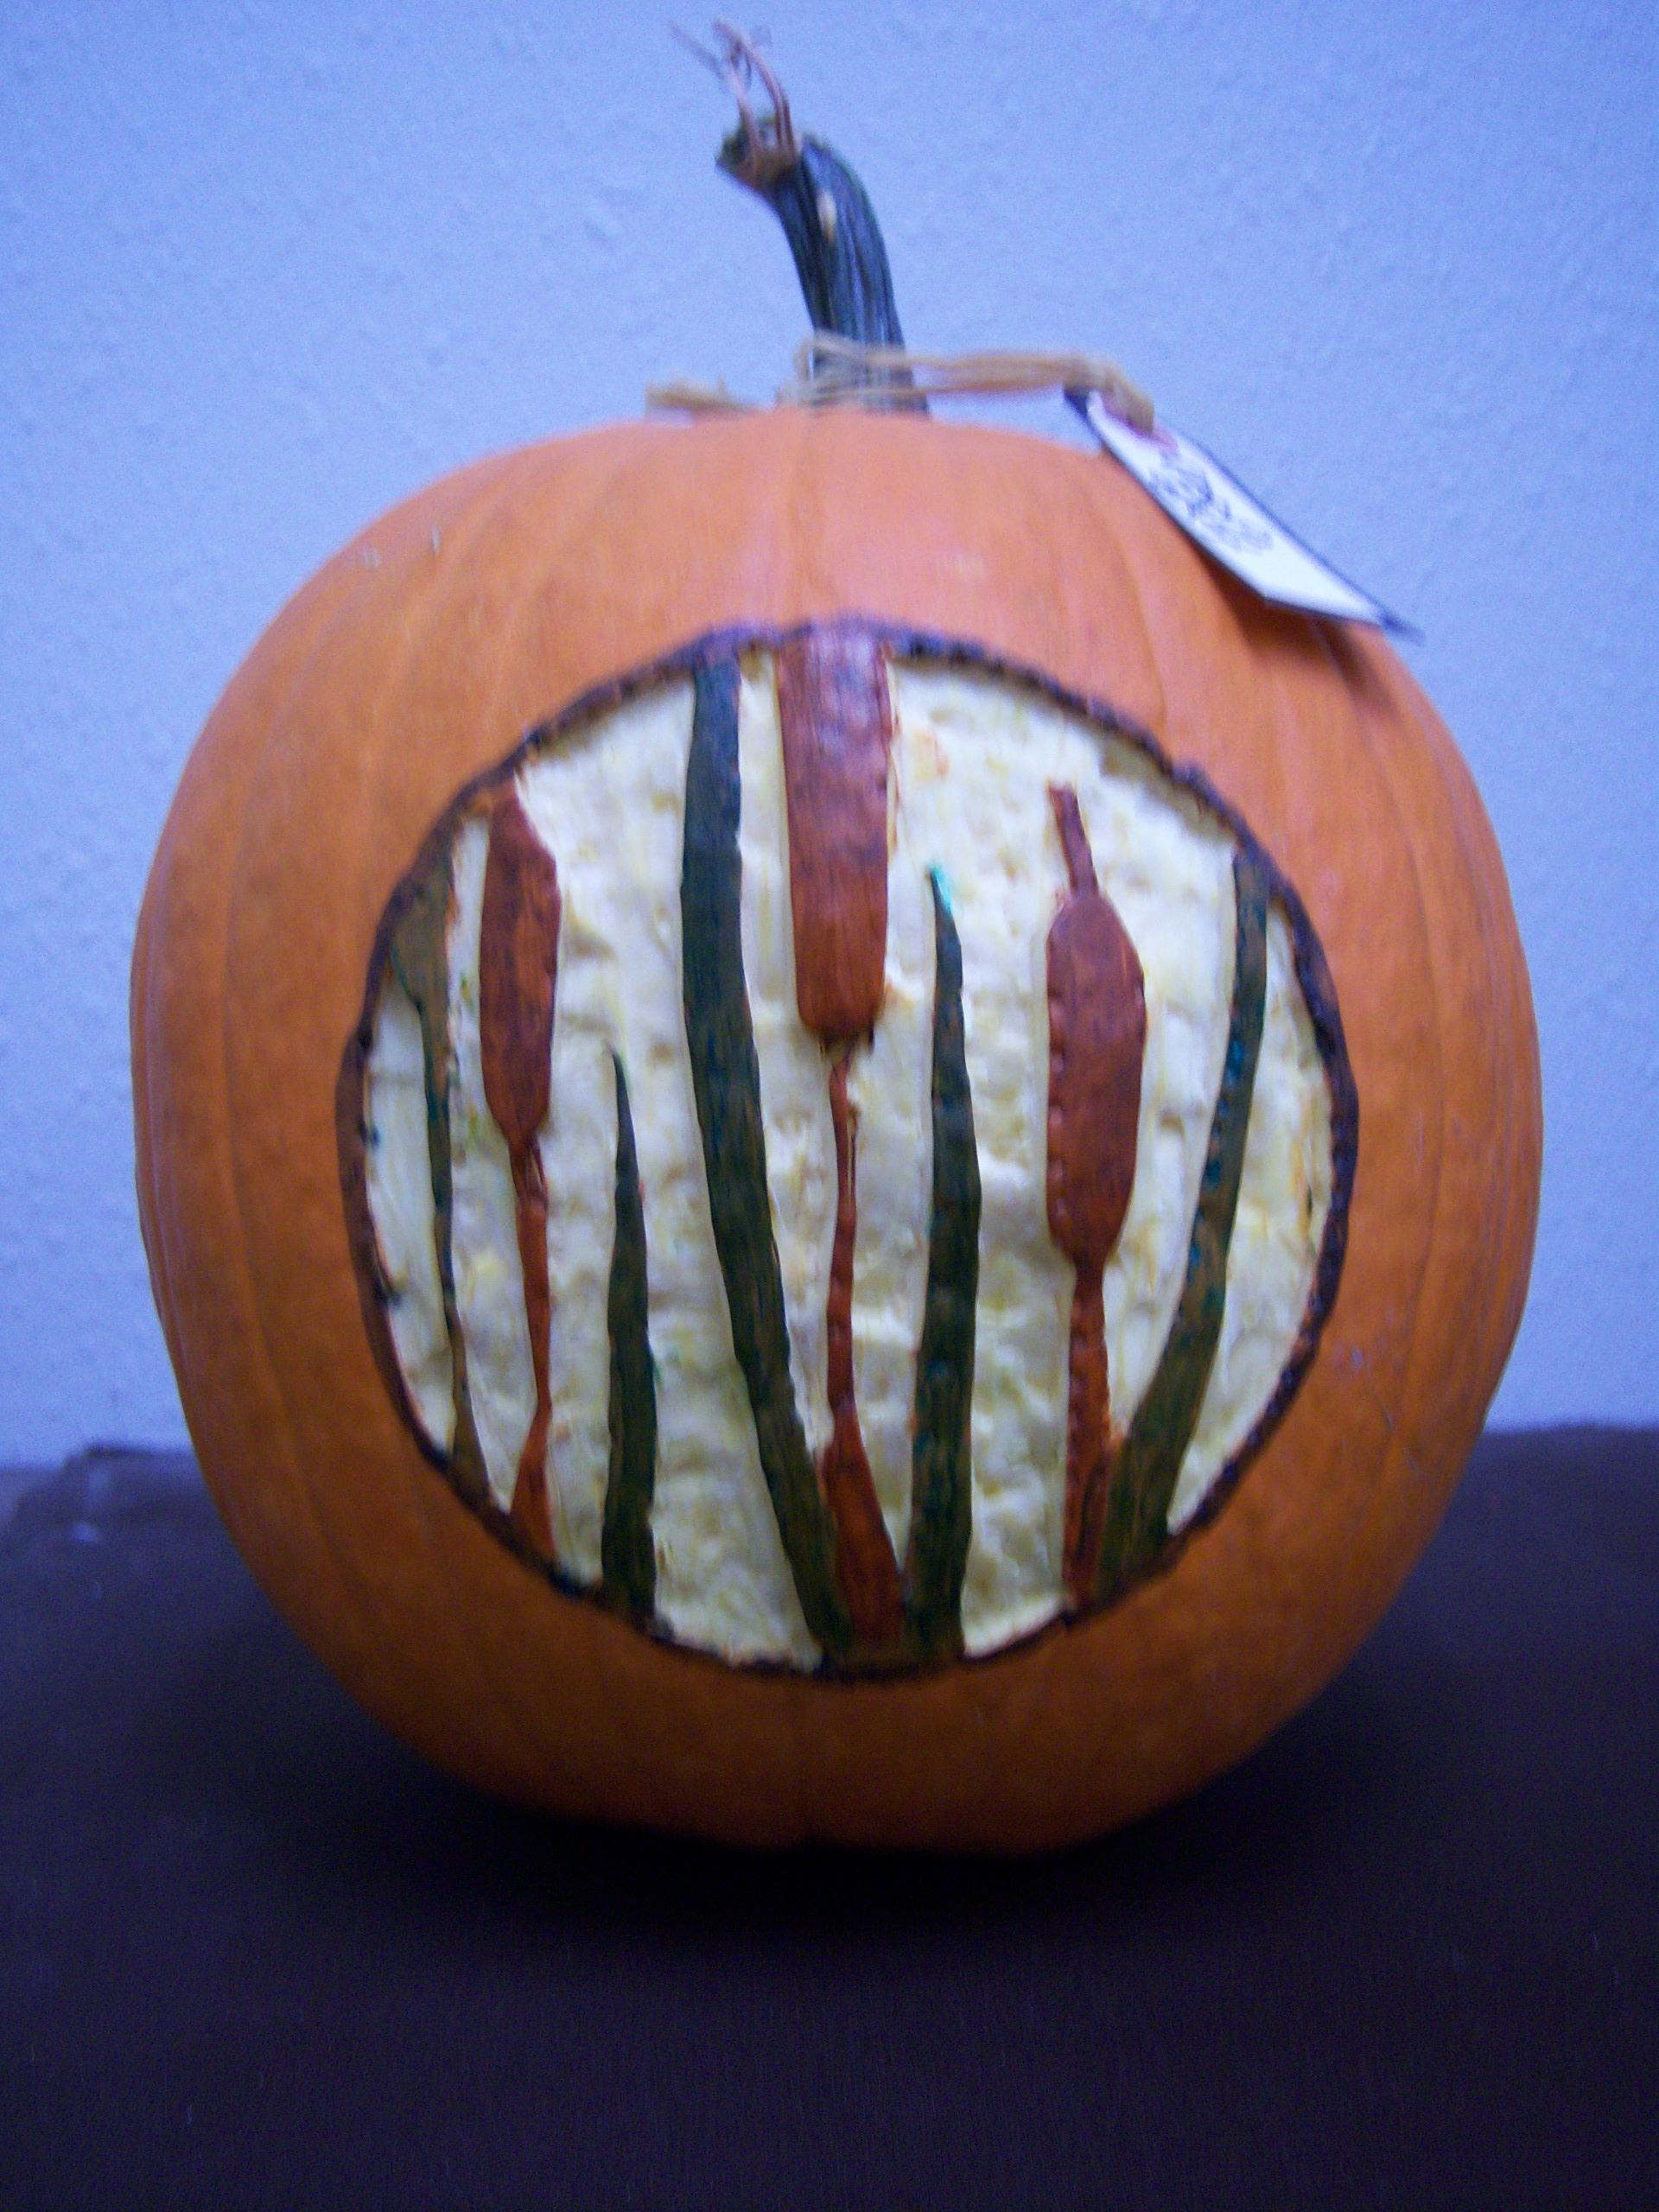 Carved pumpkin (1)